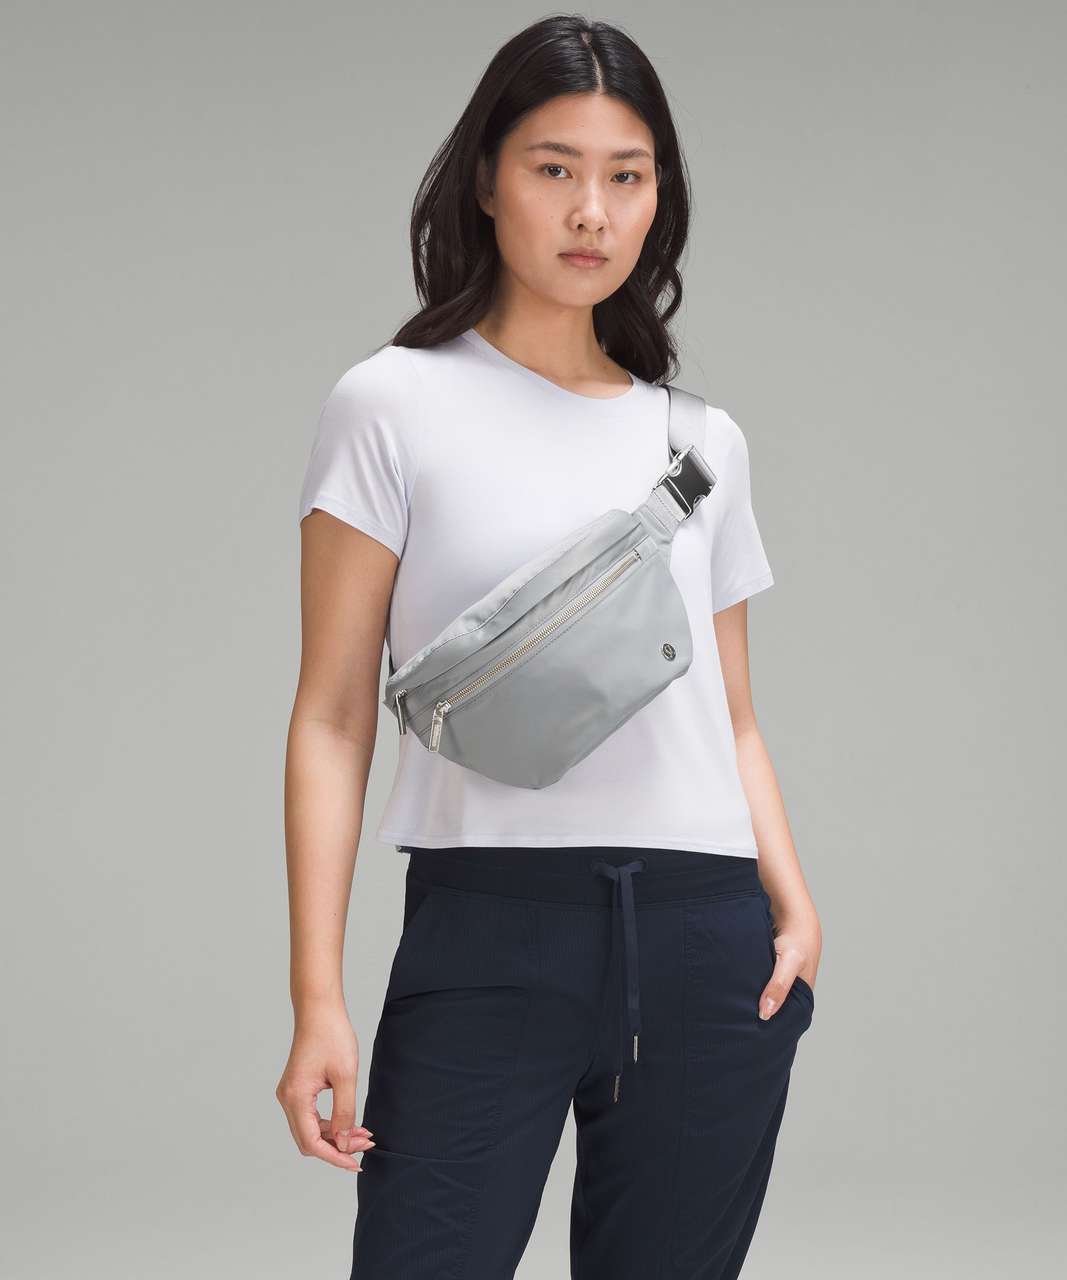 Lululemon Athletica Everywhere Belt Bag, Grey, 7.5 x 5 x 2 inches 